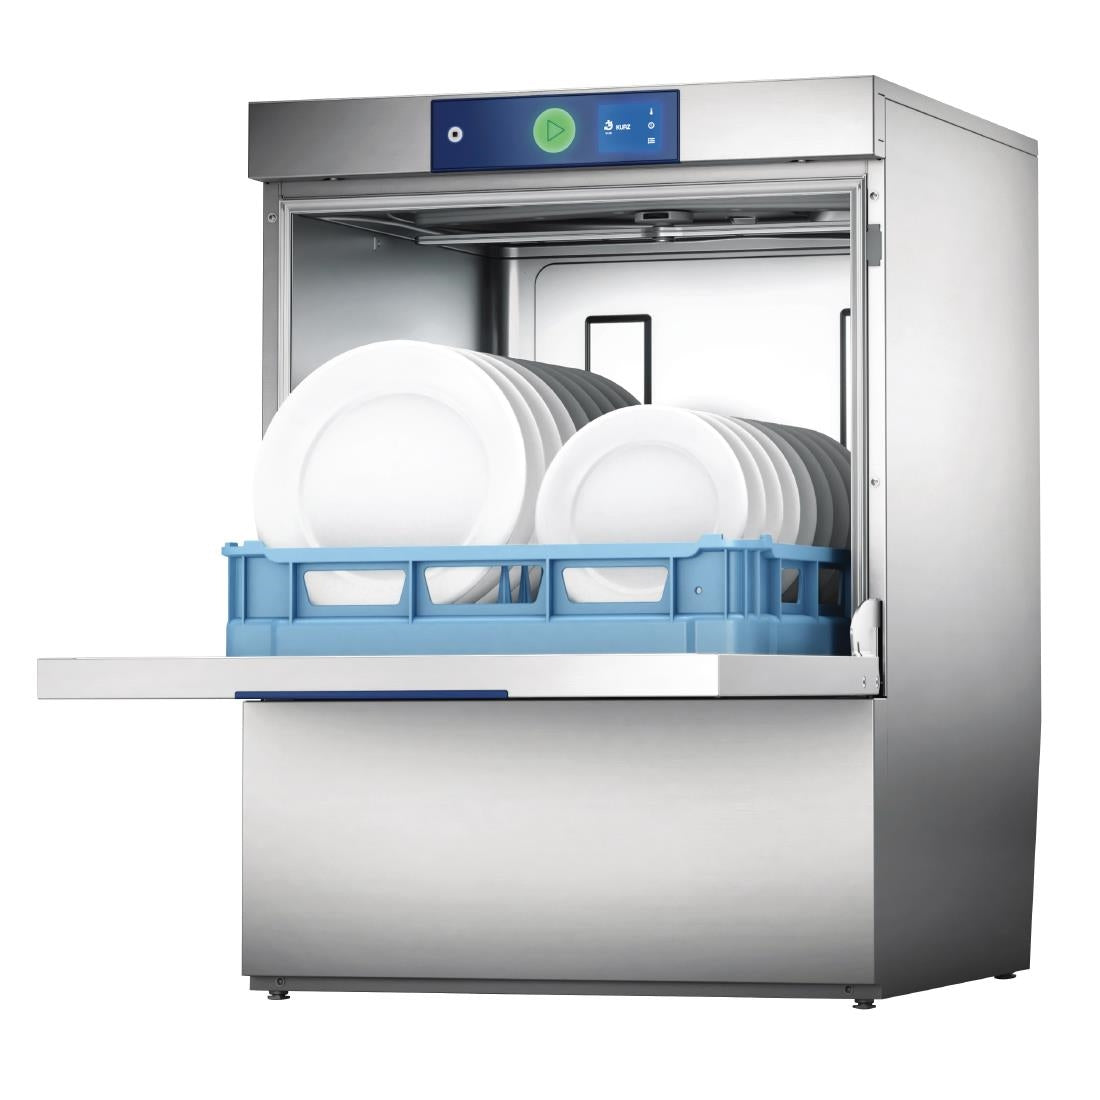 FD246 Hobart Profi Undercounter Dishwasher FX-10B JD Catering Equipment Solutions Ltd